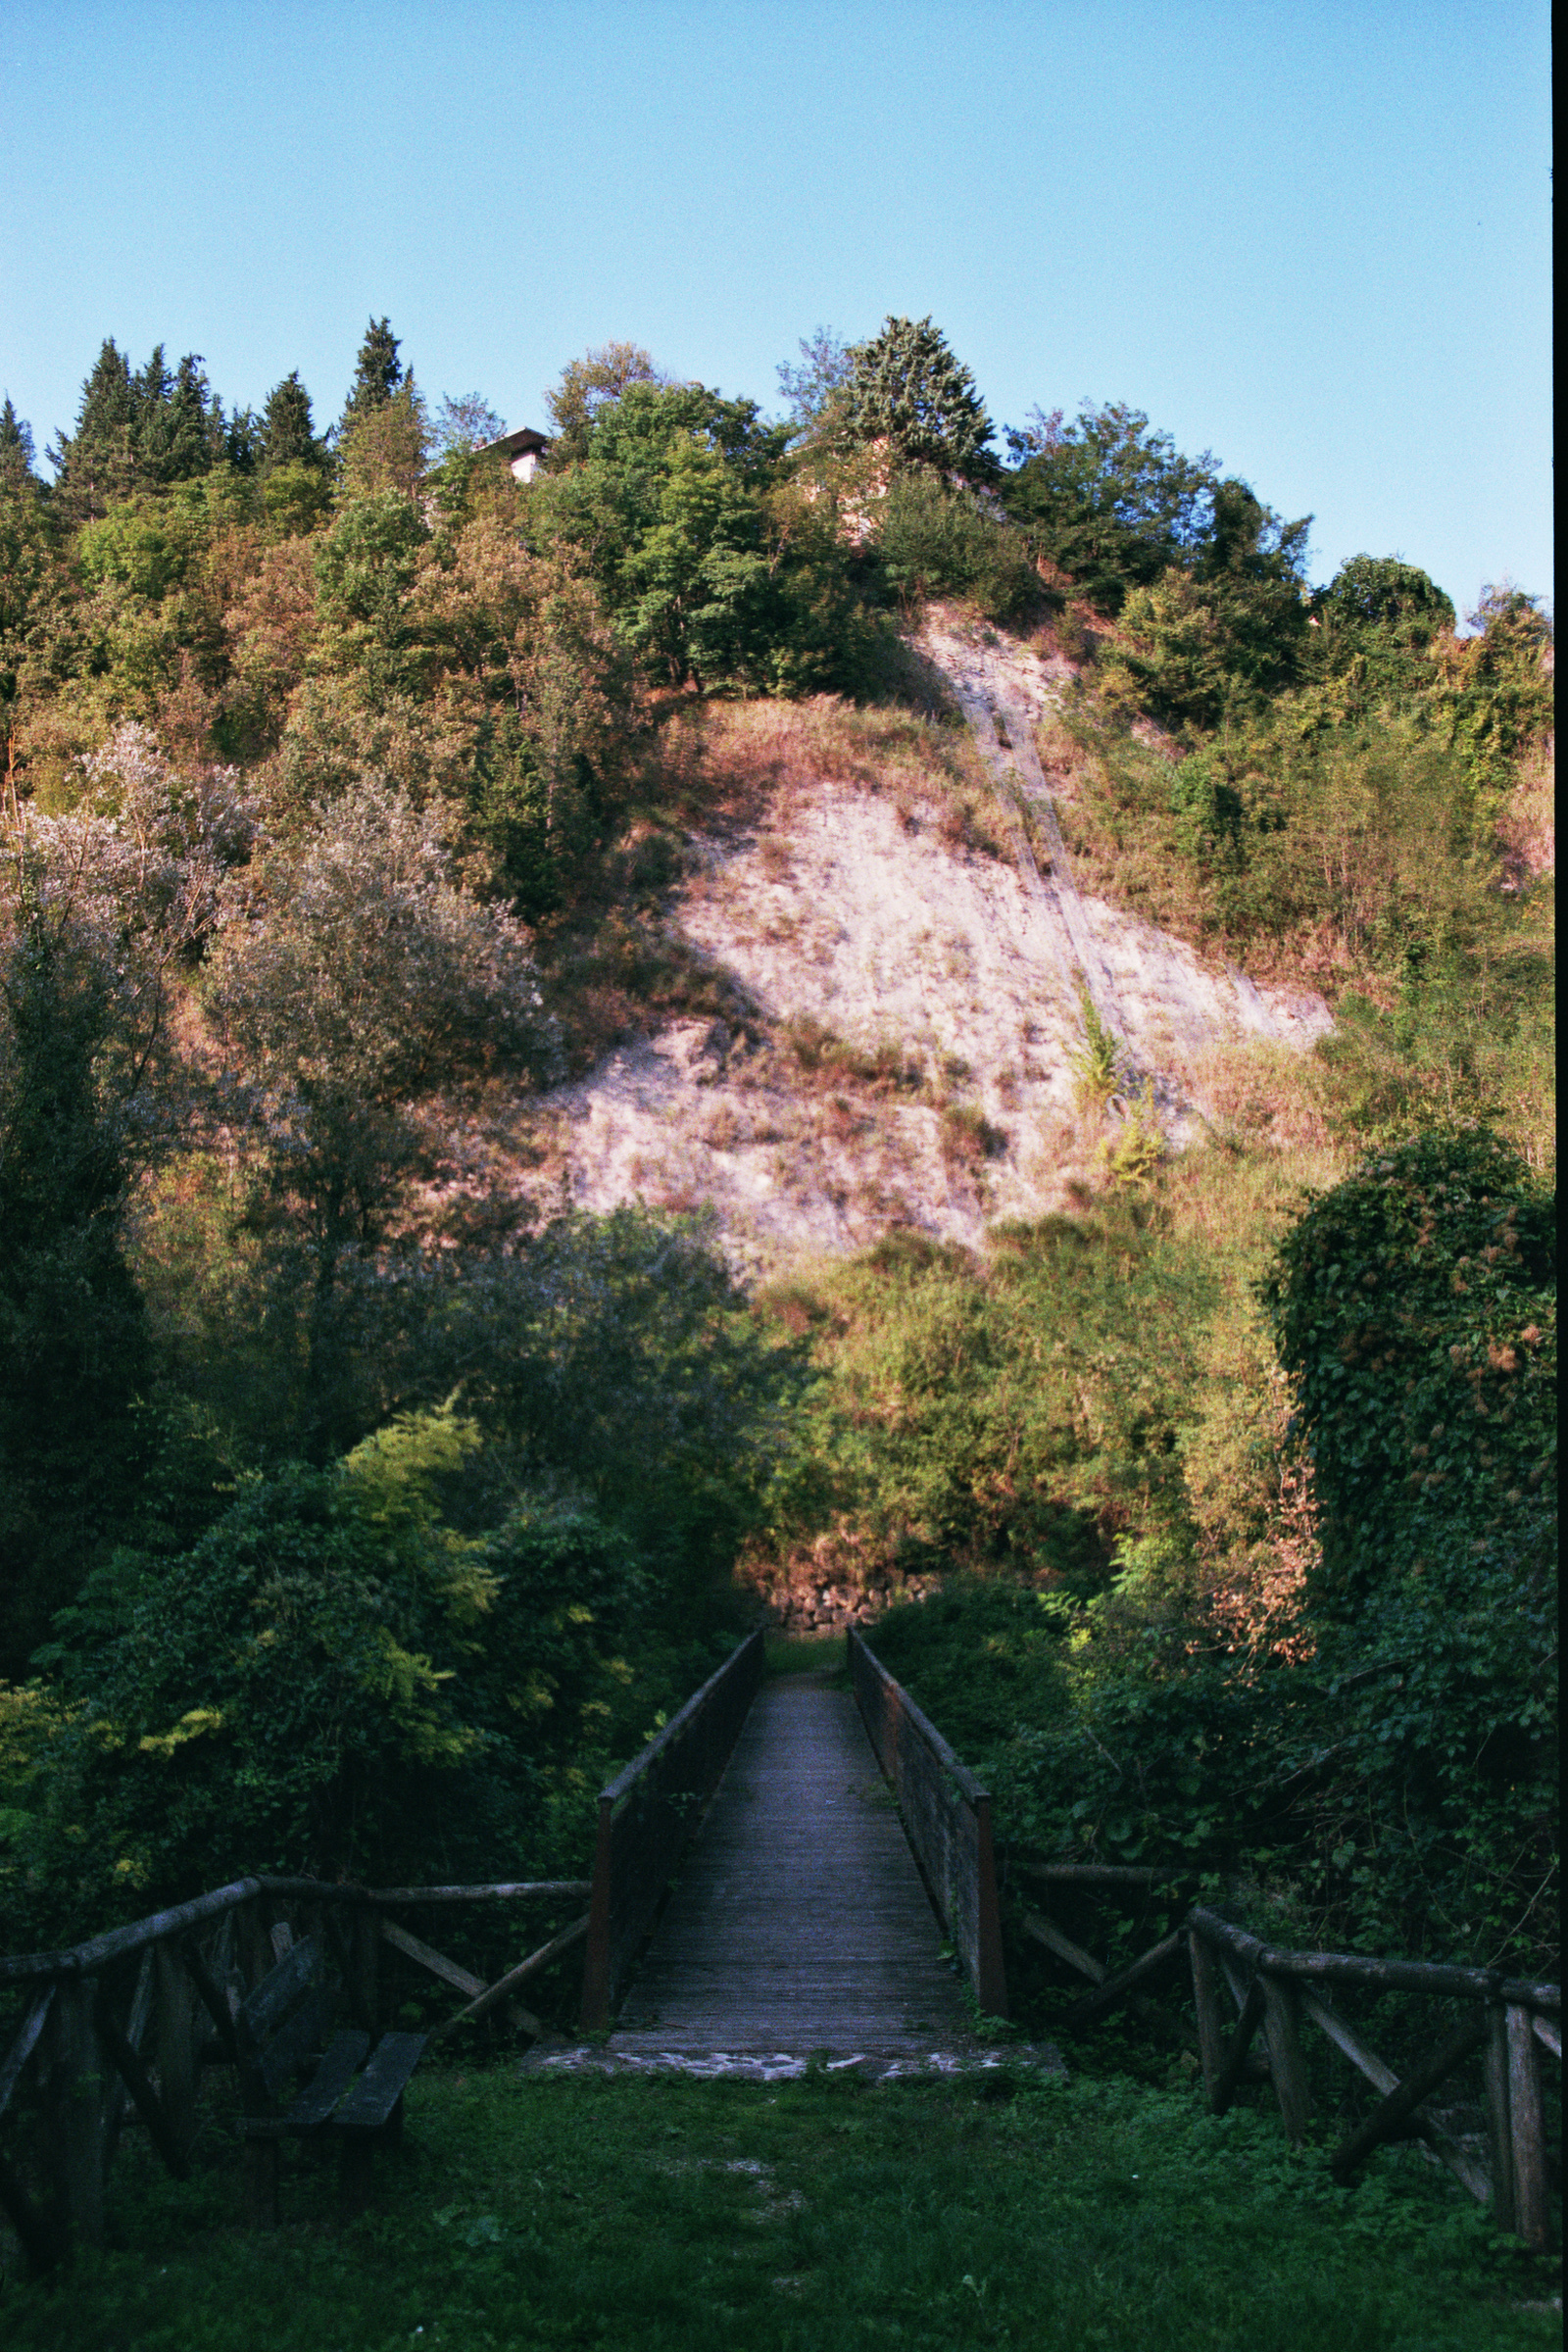 photo: https://upload.wikimedia.org/wikipedia/commons/8/83/Parco_delle_Marmitte_dei_Giganti_3.jpg